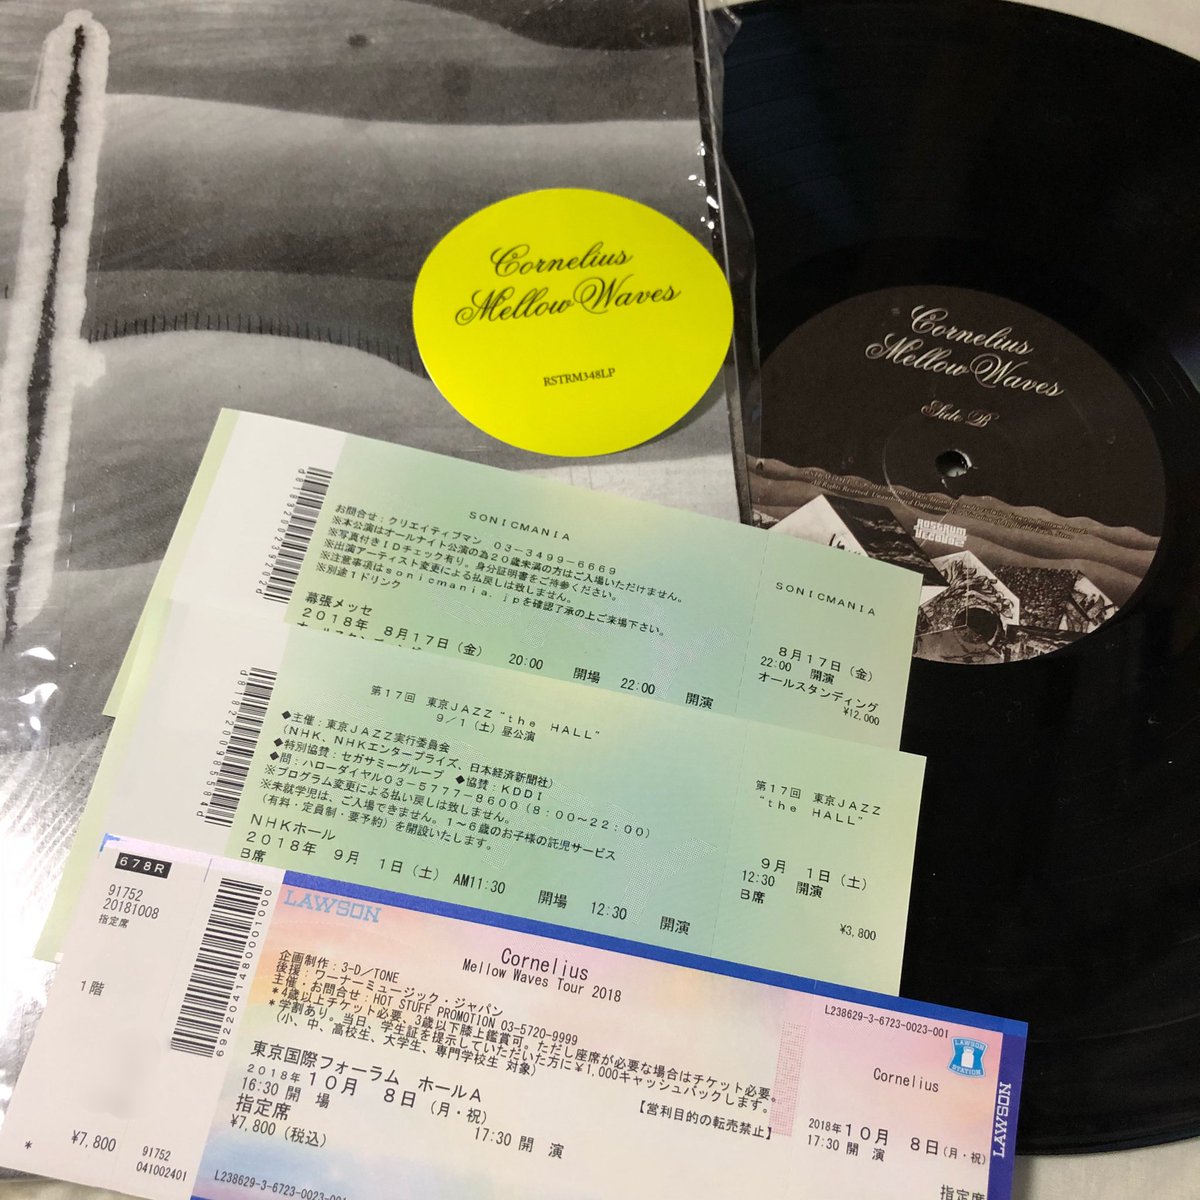 Manicrose やっとやっとソニックマニアの チケット買ったので 3ヶ月連続コーネリアスライブ Cornelius コーネリアス Sonicmania ソニックマニア Tokyojazz 東京jazz